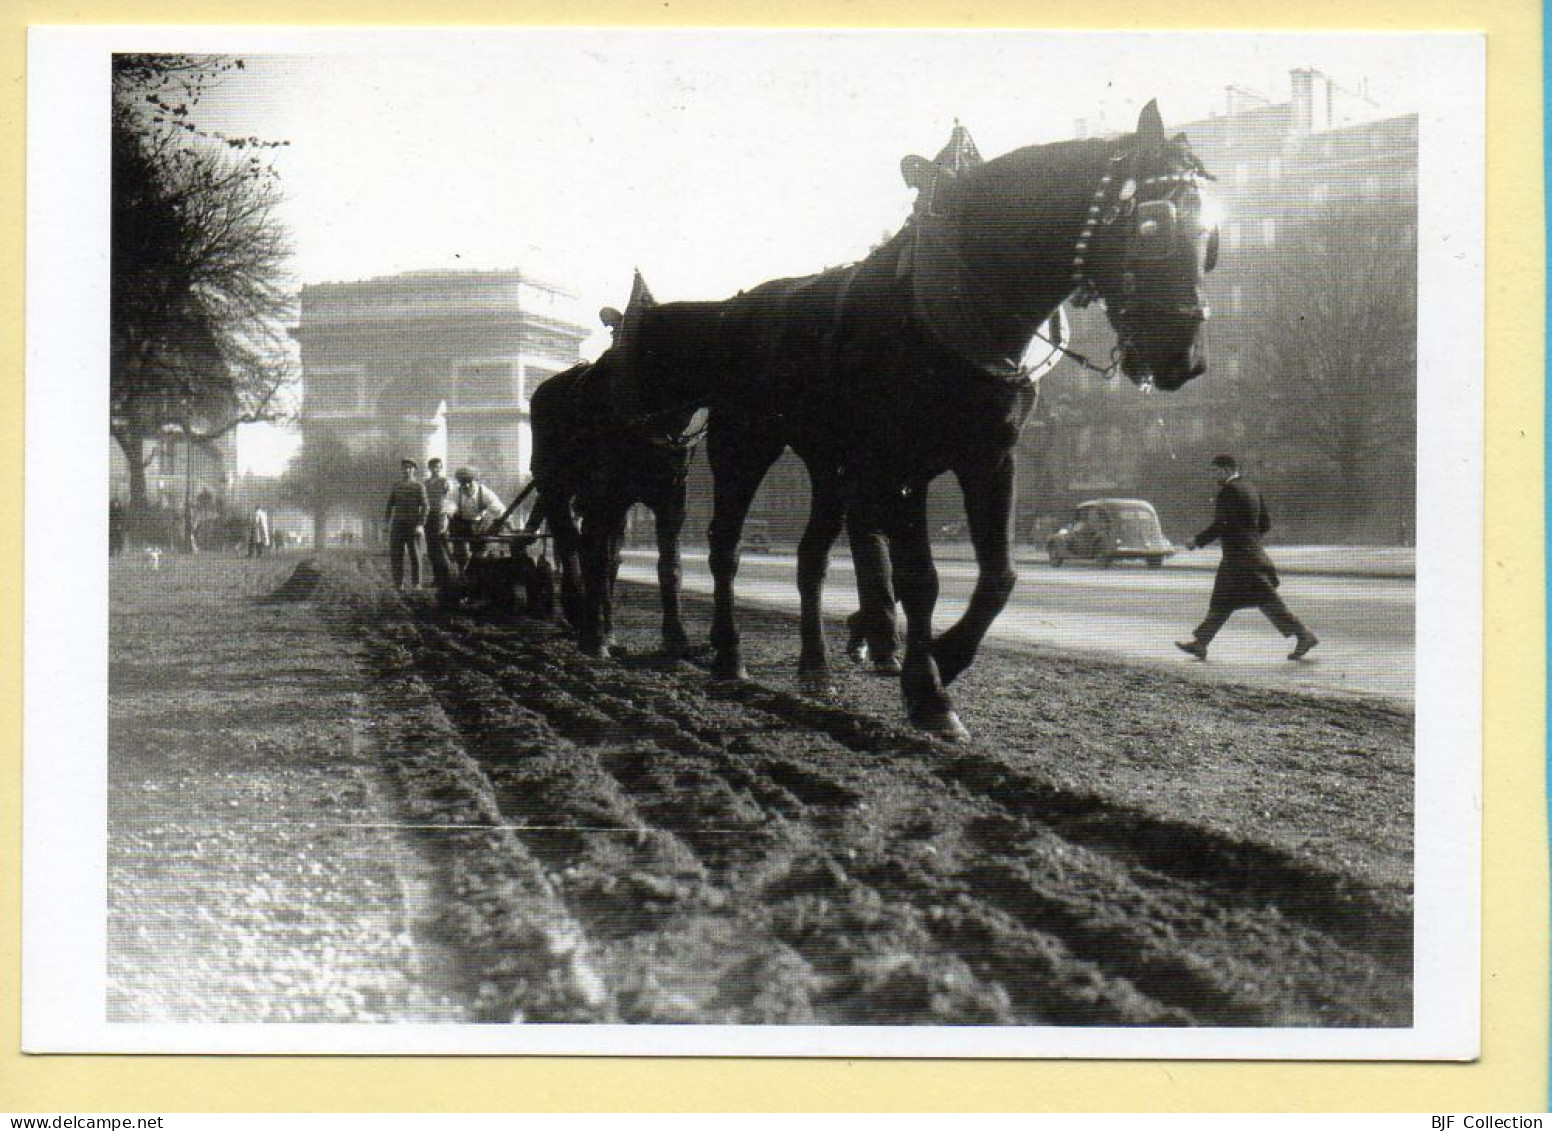 Labourage Avenue Foch / Paris 14 Novembre 1933 - Farmers